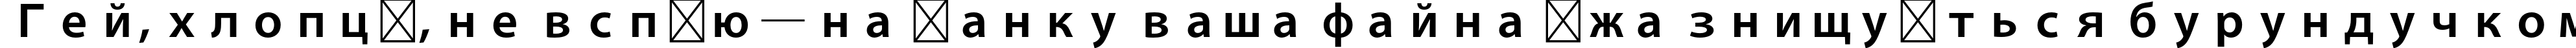 Пример написания шрифтом Adobe Gothic Std B текста на украинском